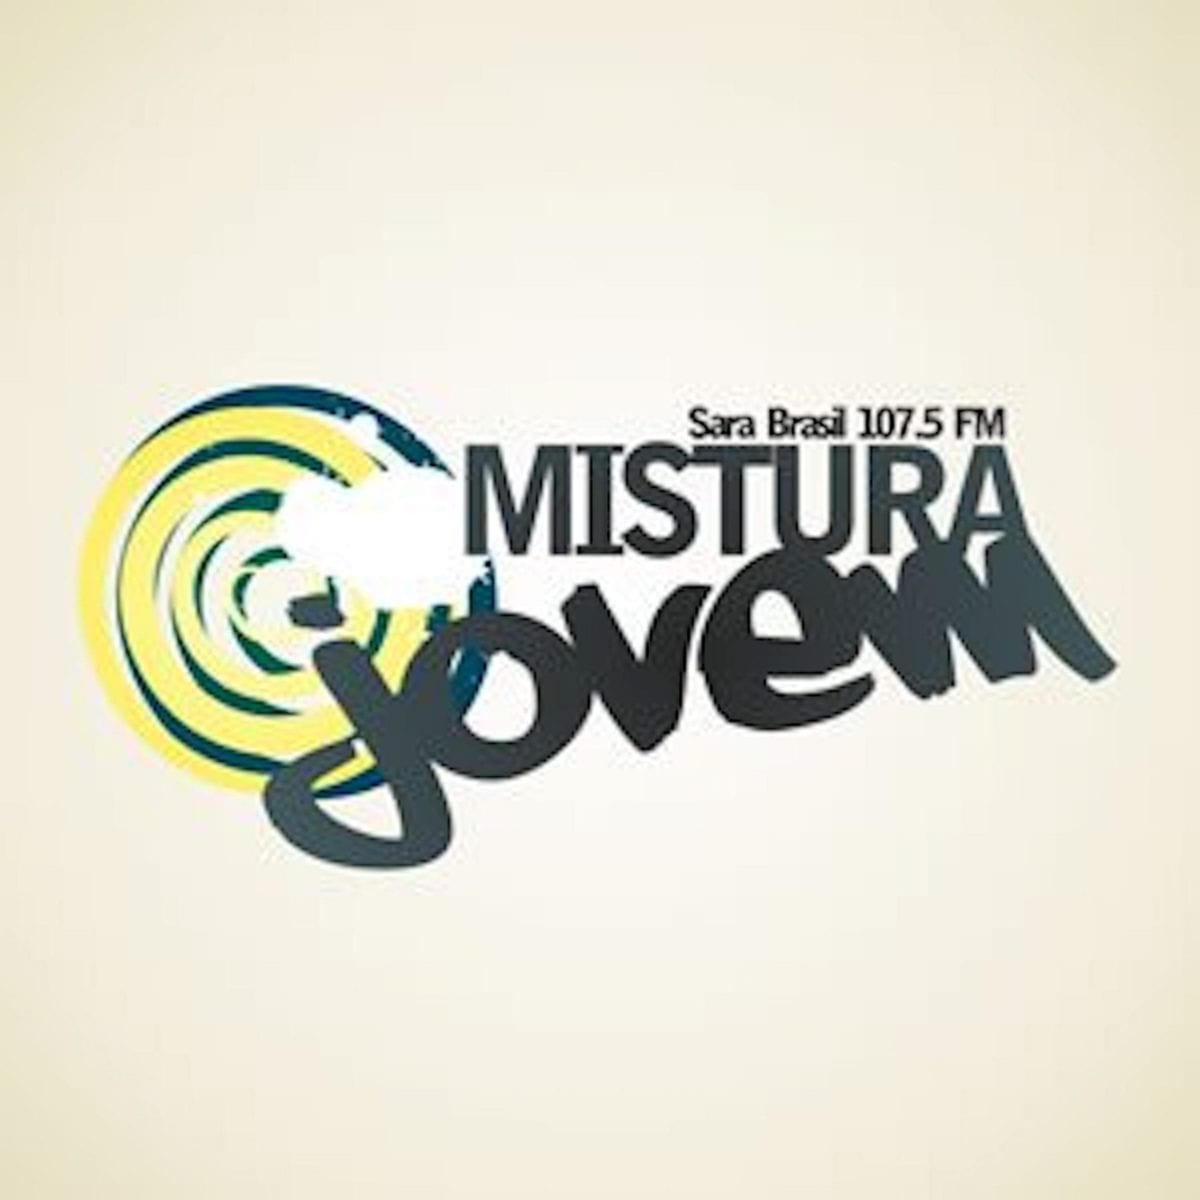 Mistura Jovem - Logo Podcast